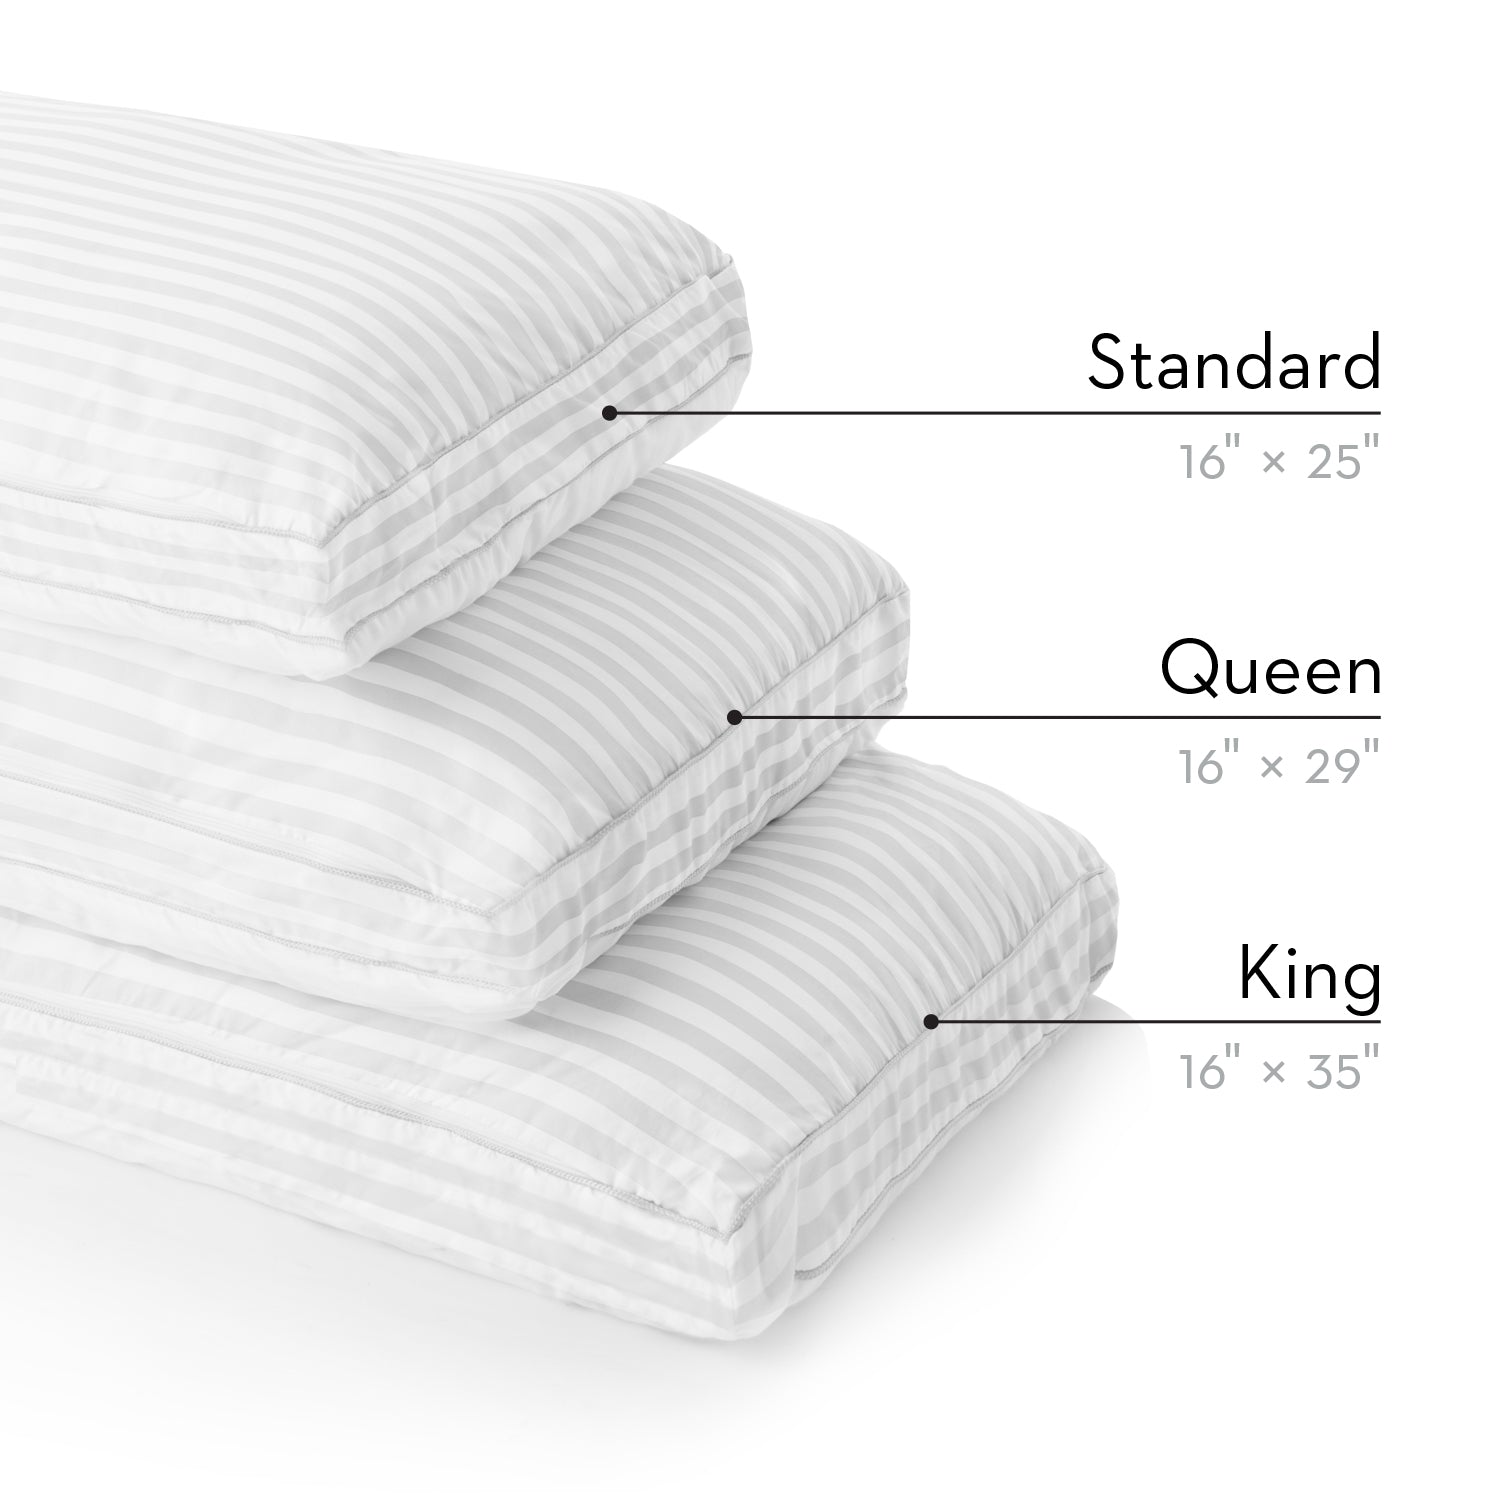 Convolution® Pillow size options